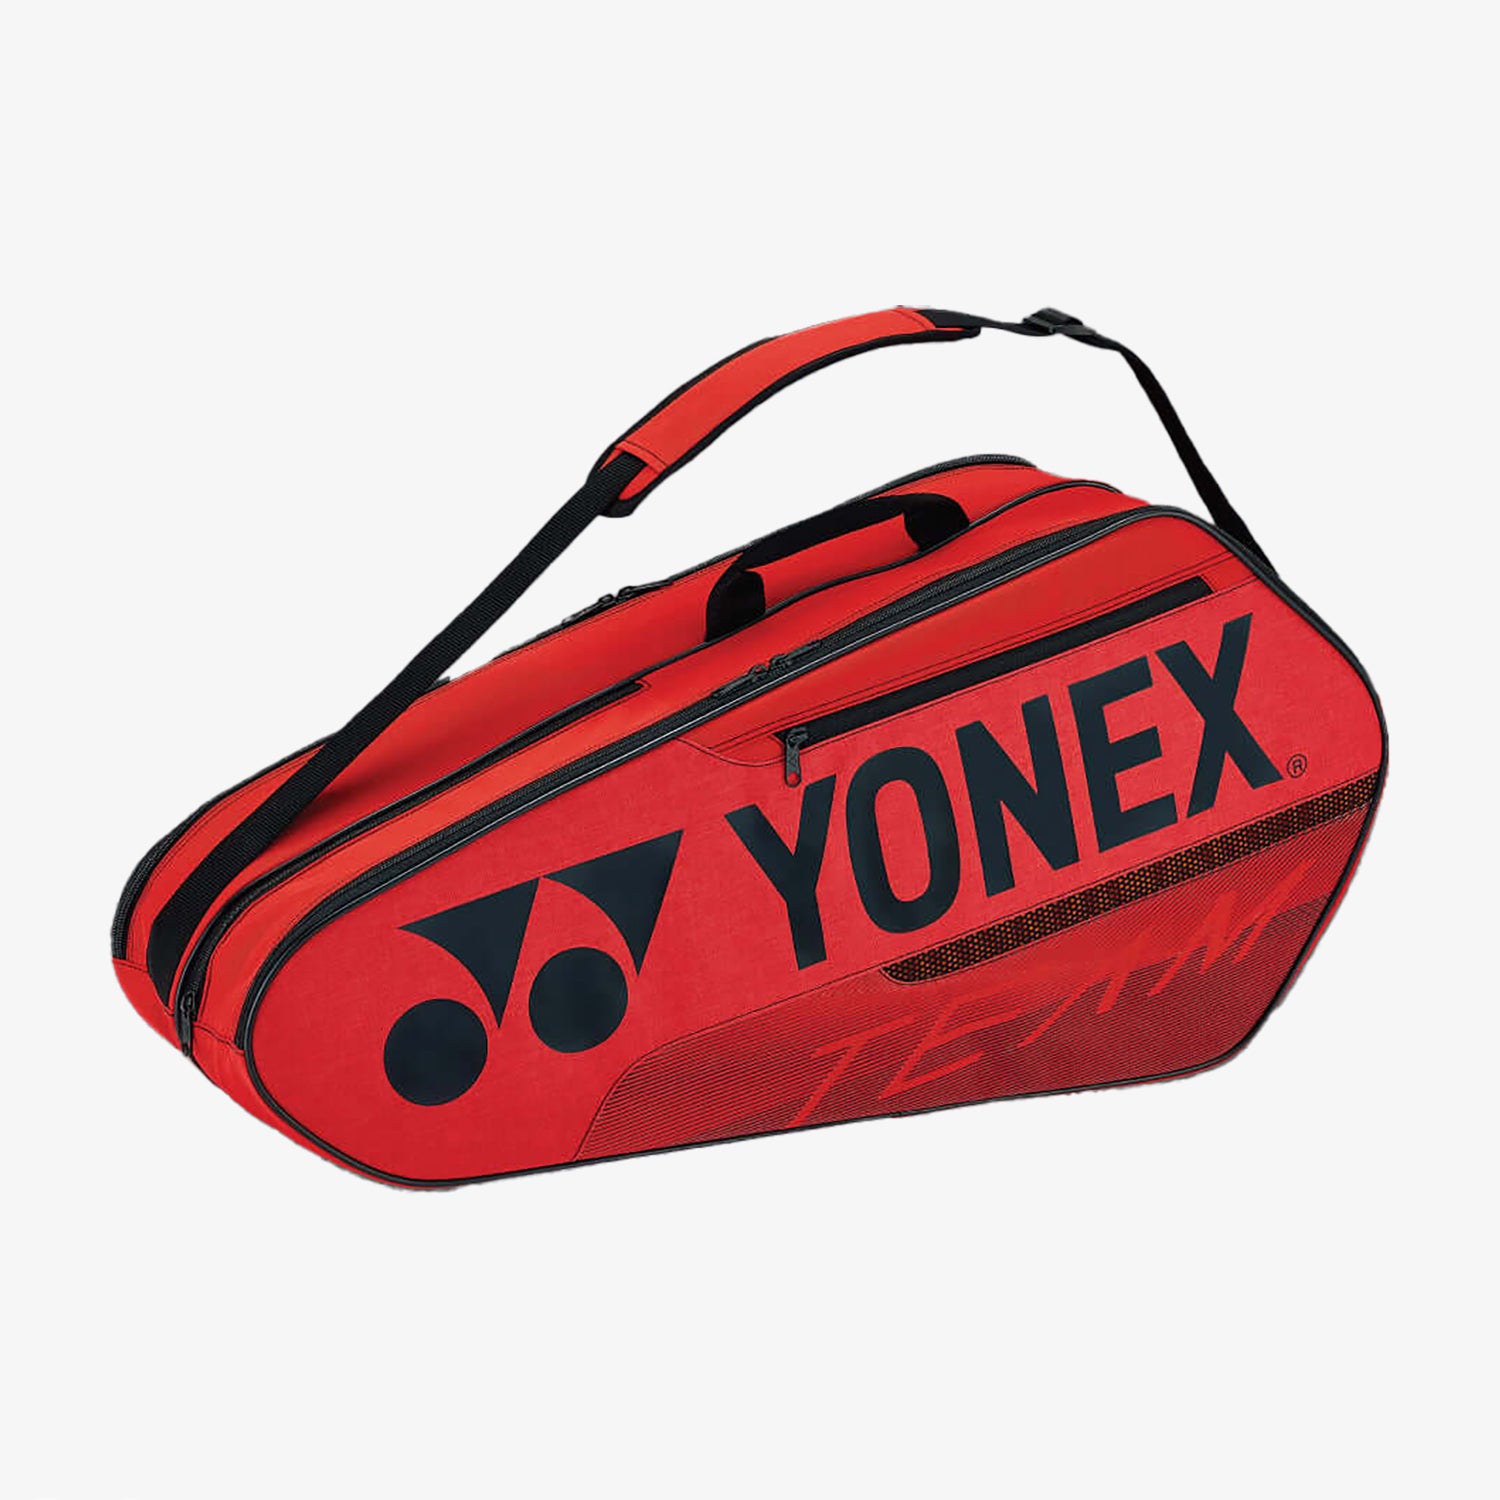 Yonex 42126 (Red) 6pk Team Badminton Tennis Racket Bag